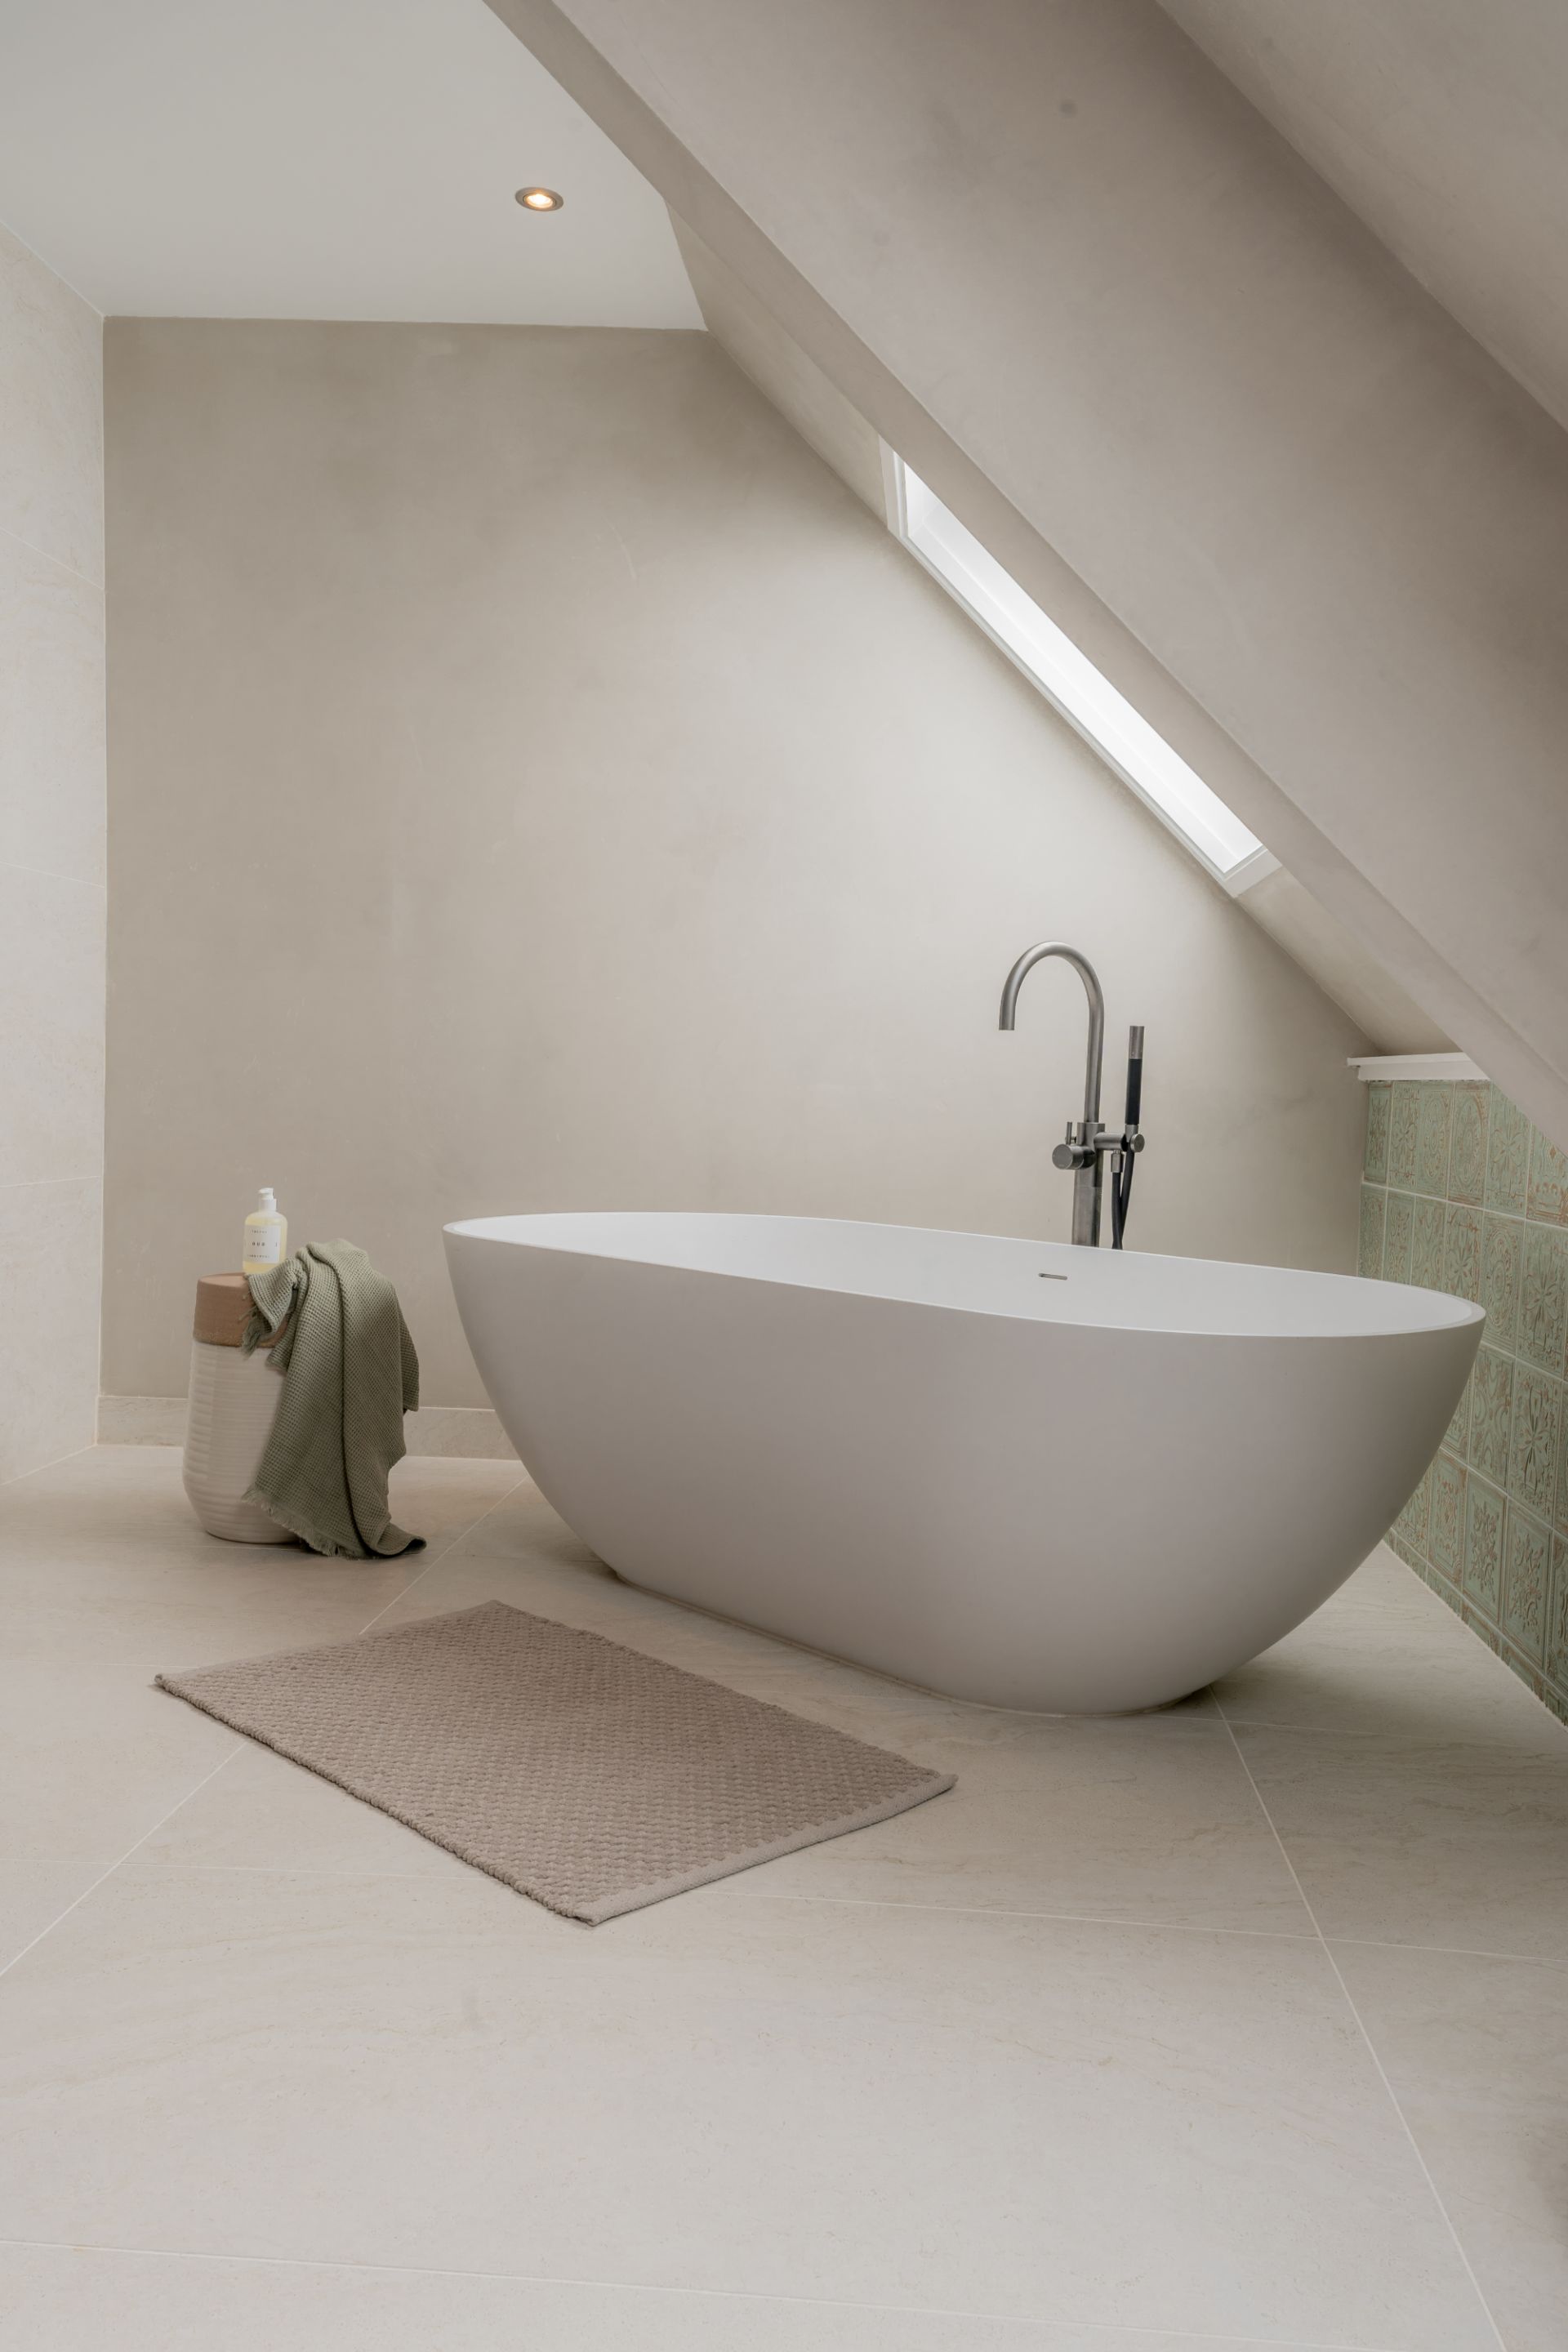 Foto: landelijke en luxe badkamers in purmerend    eerste kamer badkamers   017